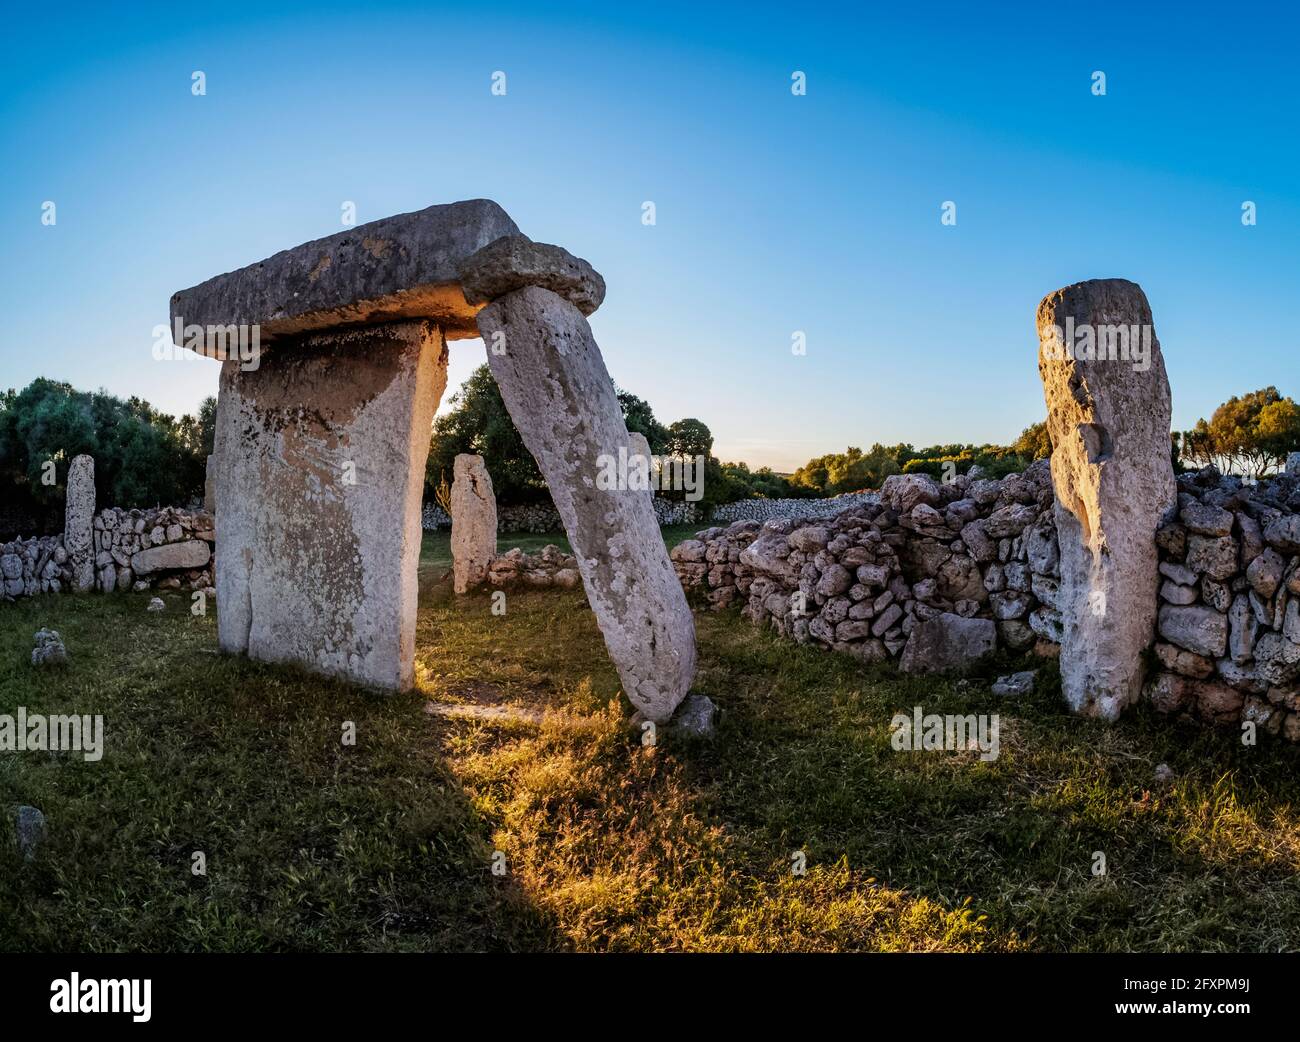 Taula at sunset, Talati de Dalt archaeological site, Menorca (Minorca), Balearic Islands, Spain, Mediterranean, Europe Stock Photo